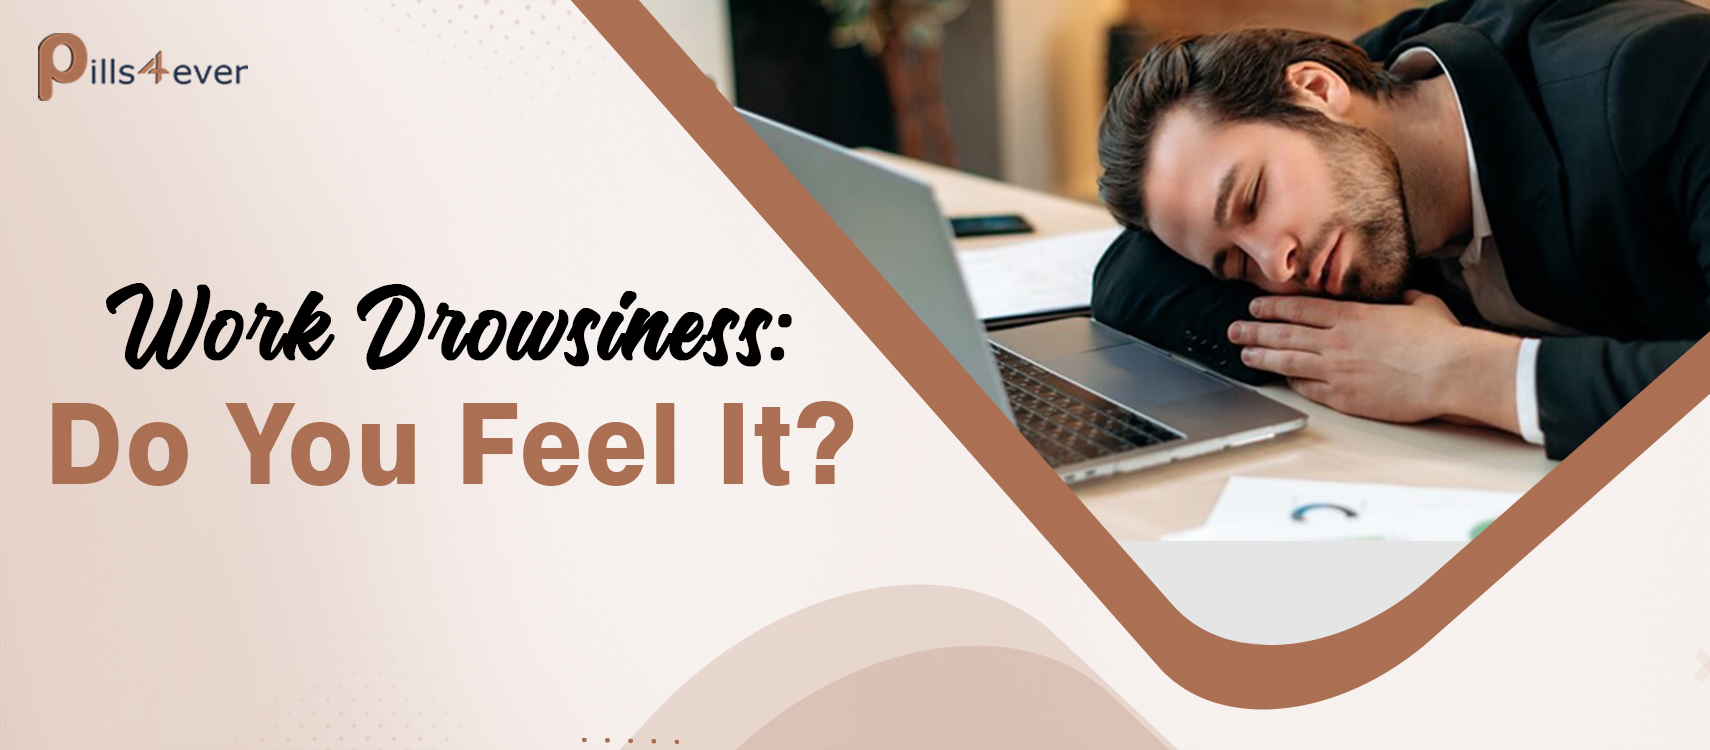 Work Drowsiness: Do You Feel It?